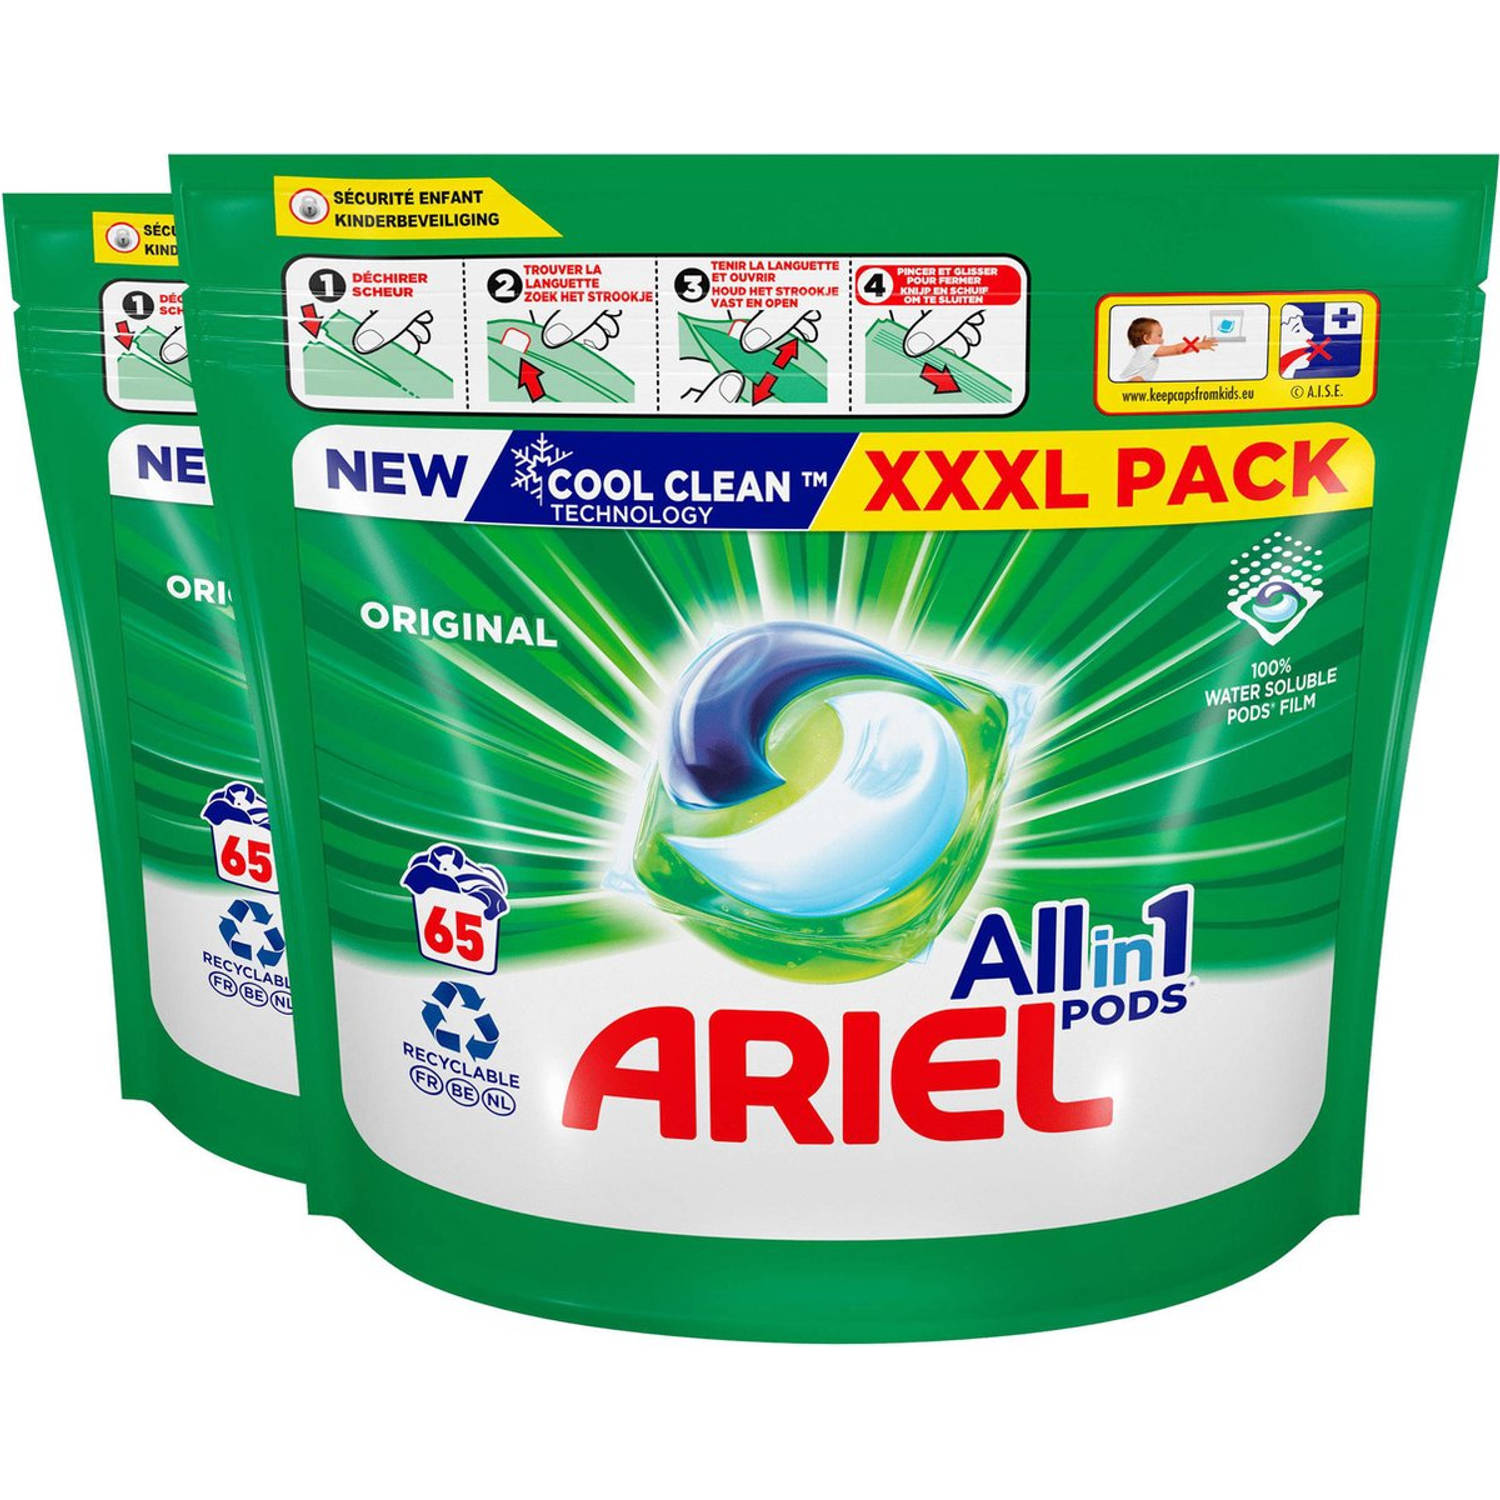 Ariel All-in-1 Pods - Original - 130 stuks / wasbeurten (2 x 65) - XXXL Pack